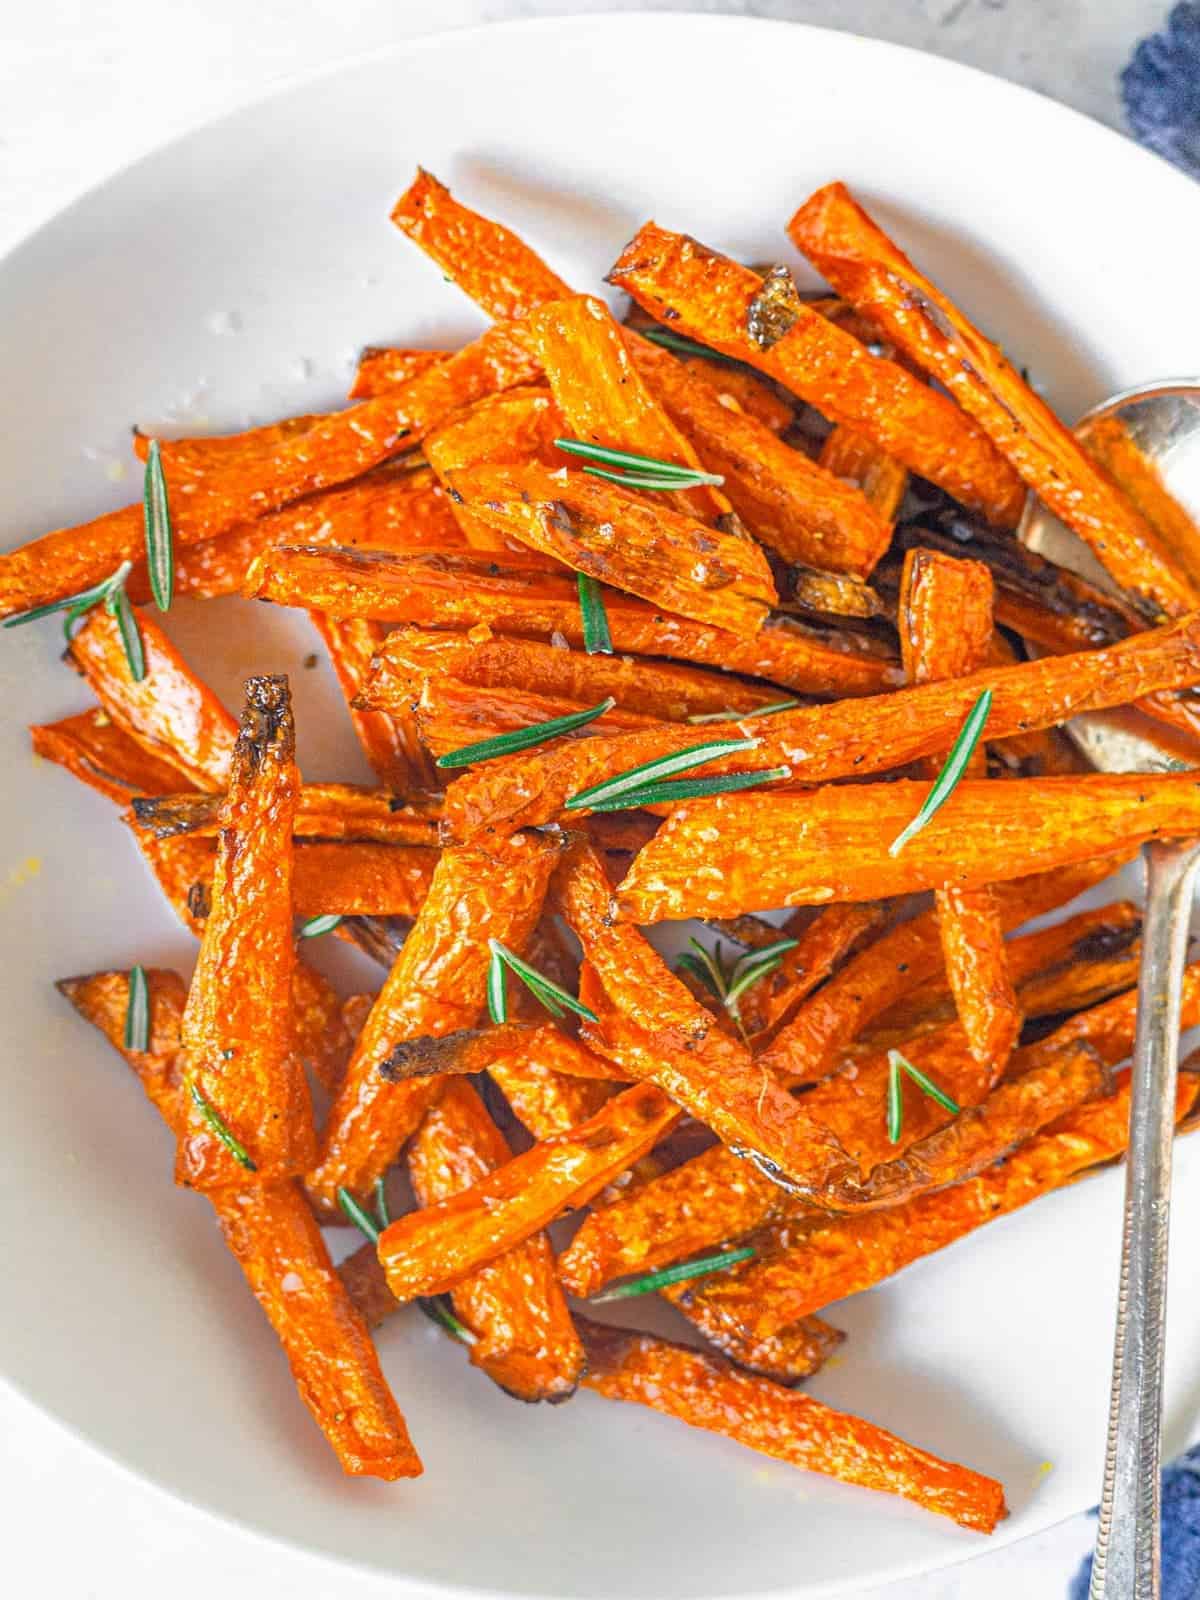 Roasted garlic air fryer carrots